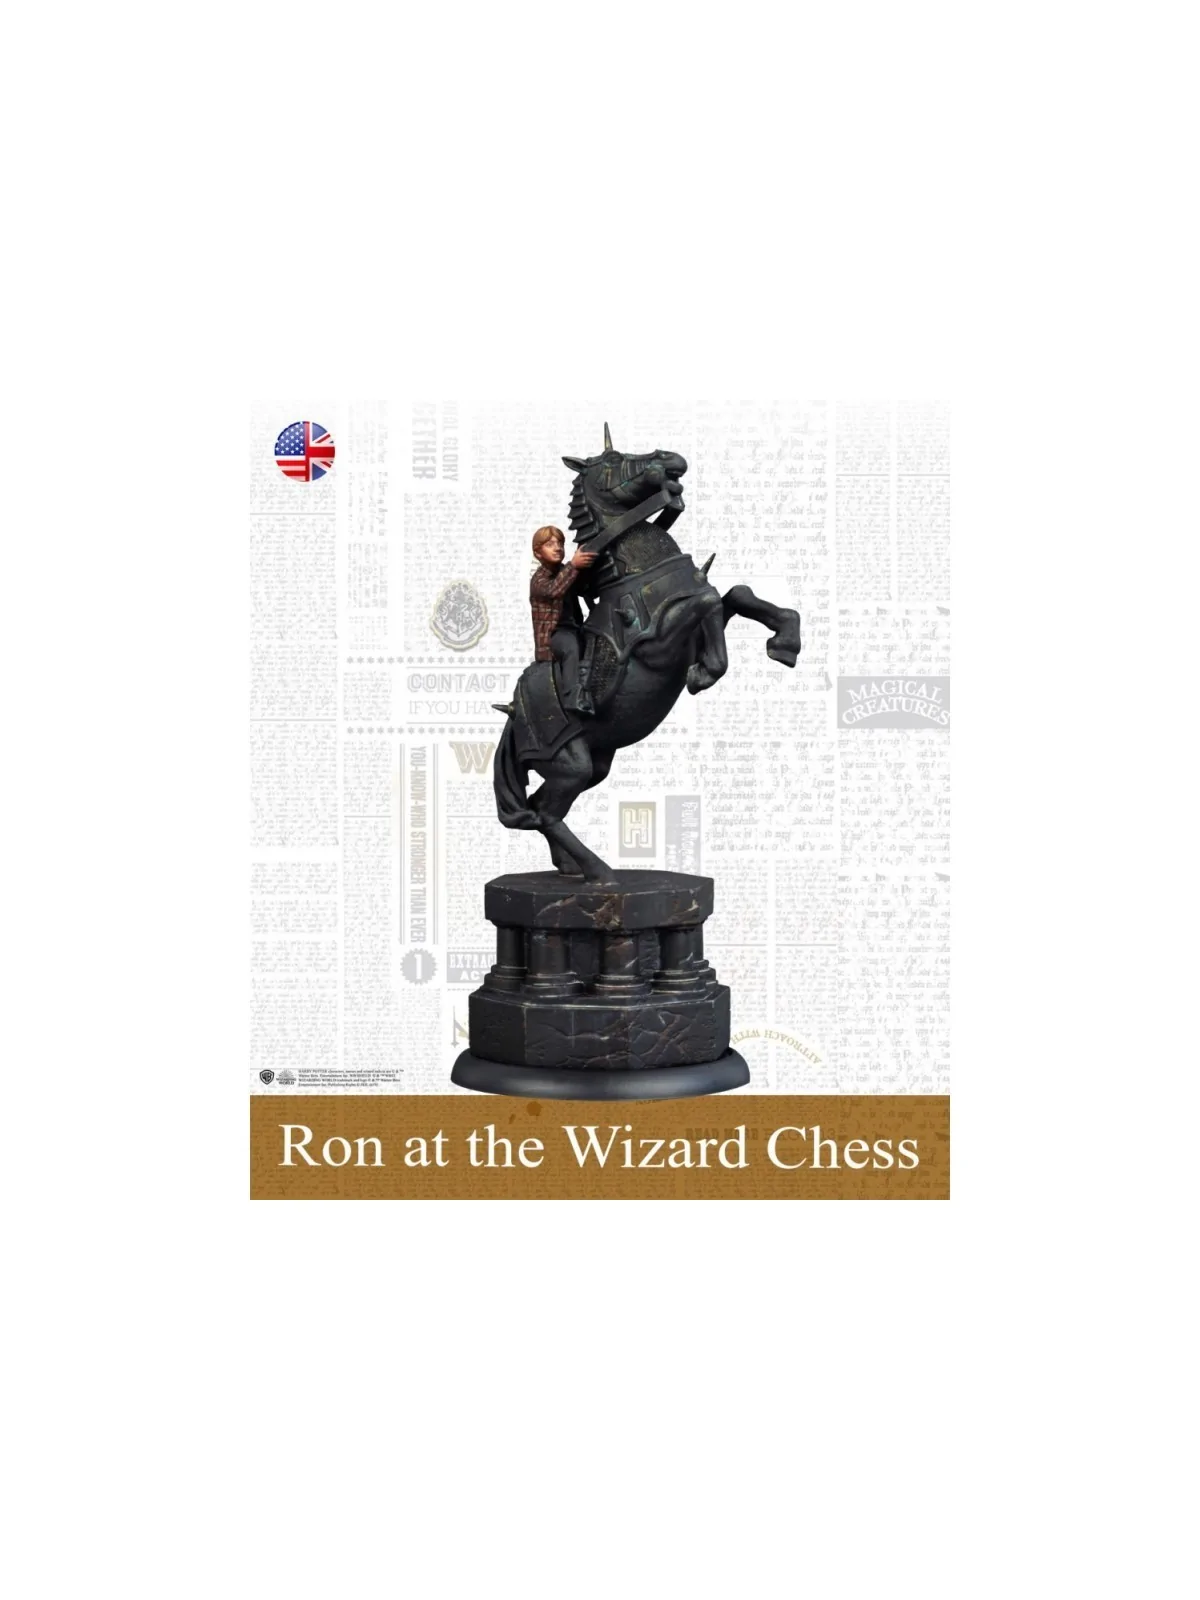 Comprar Harry Potter Miniatures Adventure Game - Ron Weasley en el Aje